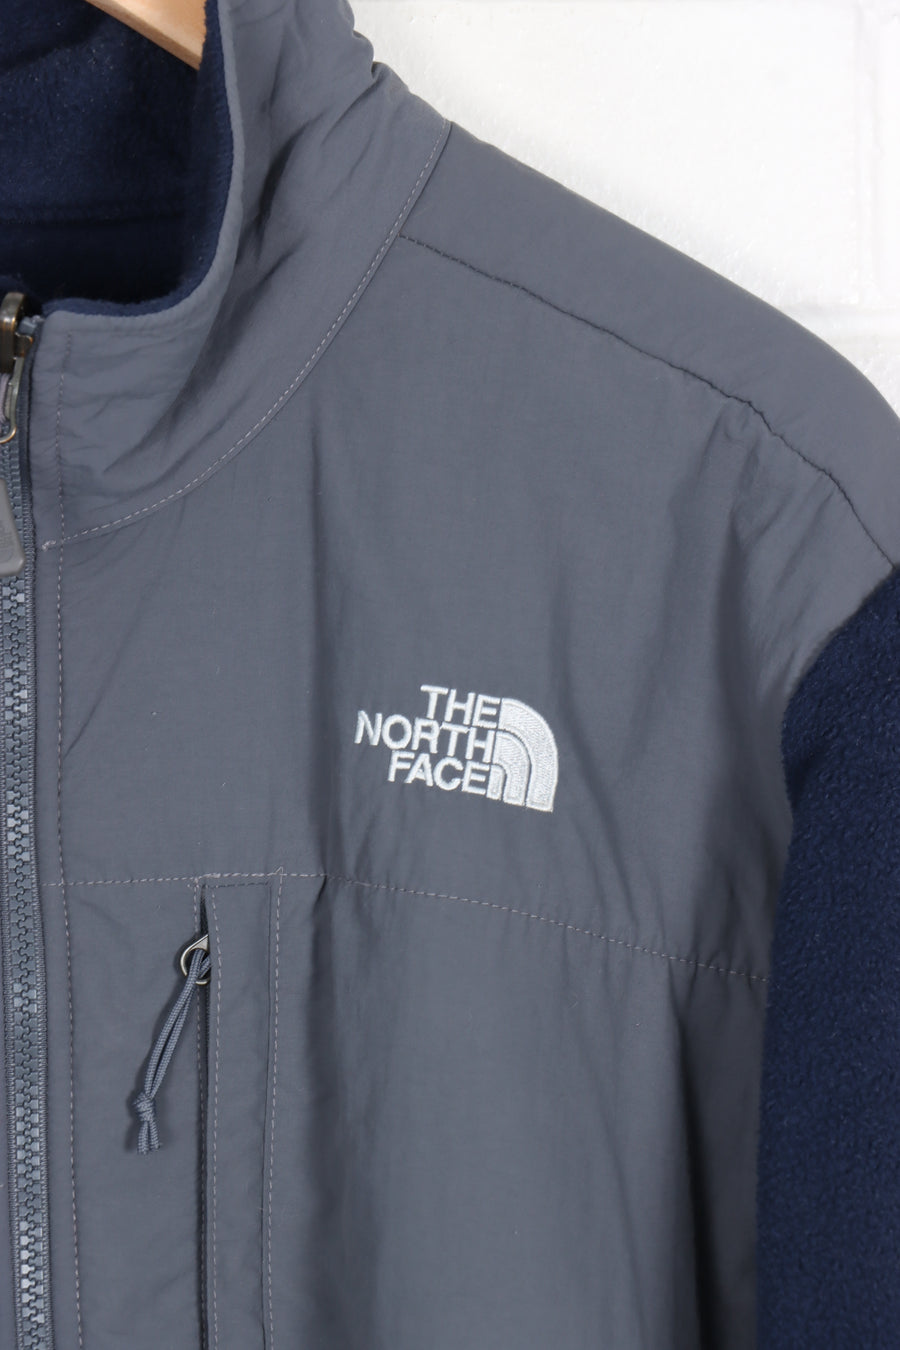 THE NORTH FACE Navy & Grey Panel Zip Up Fleece Jacket (L-XL)